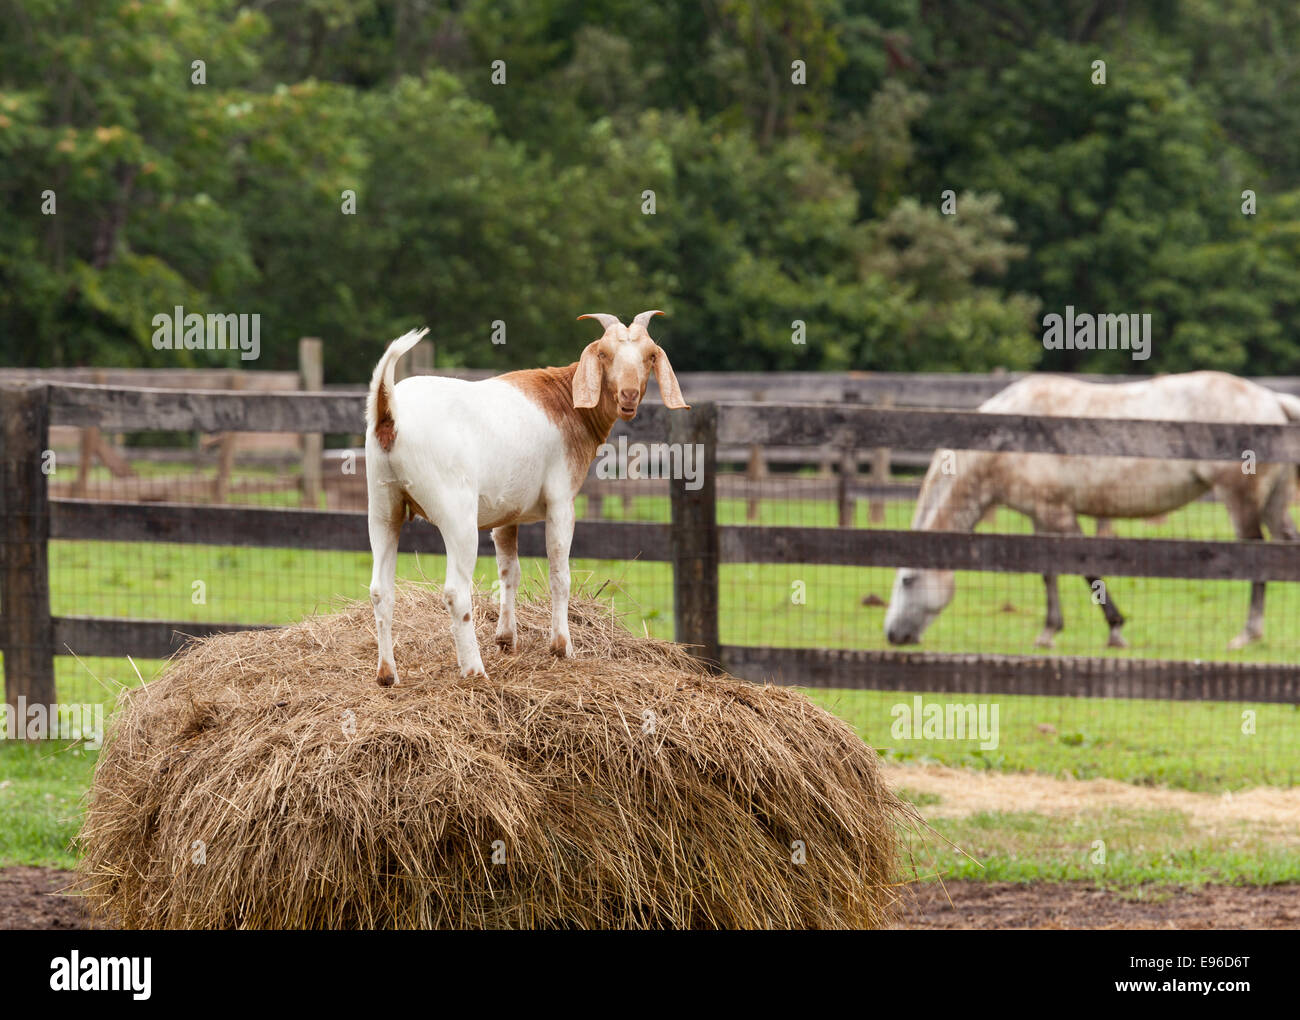 White goat on straw bale in farm field Stock Photo